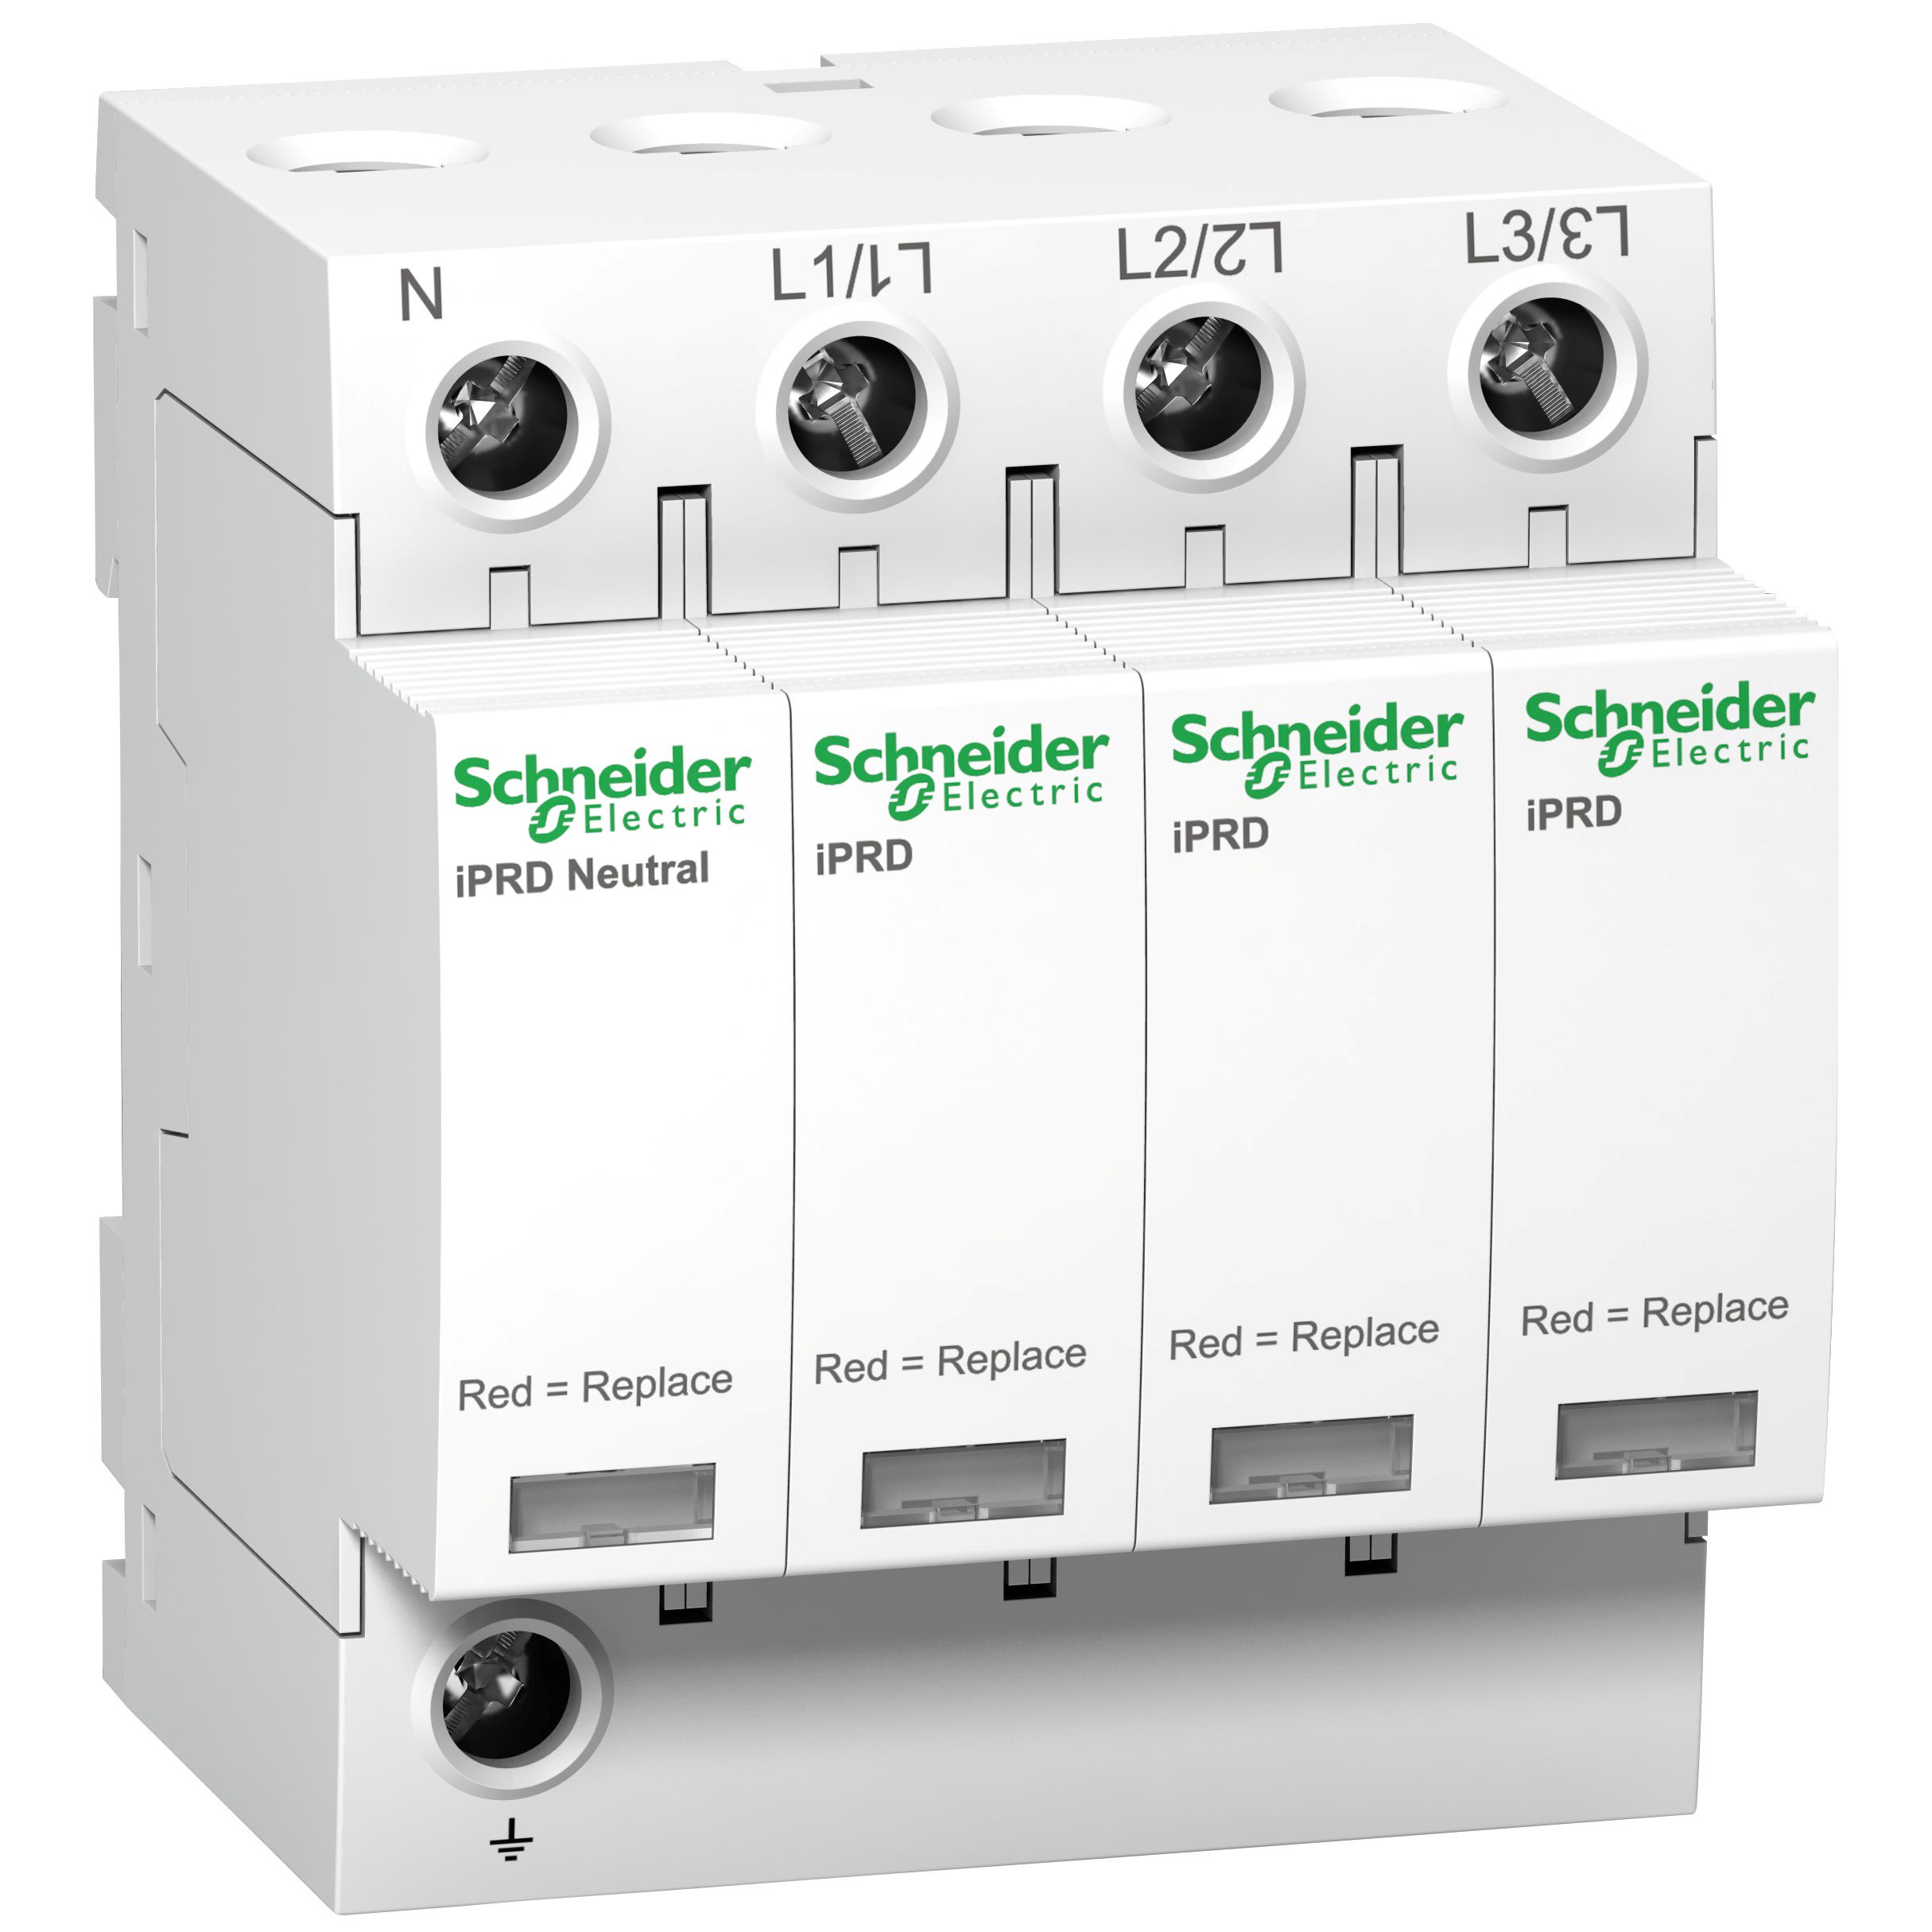 Schneider Electric - Acti9 - Parafoudre iPRD65r - 65kA - 350V - 3PN - avec report de signalisation